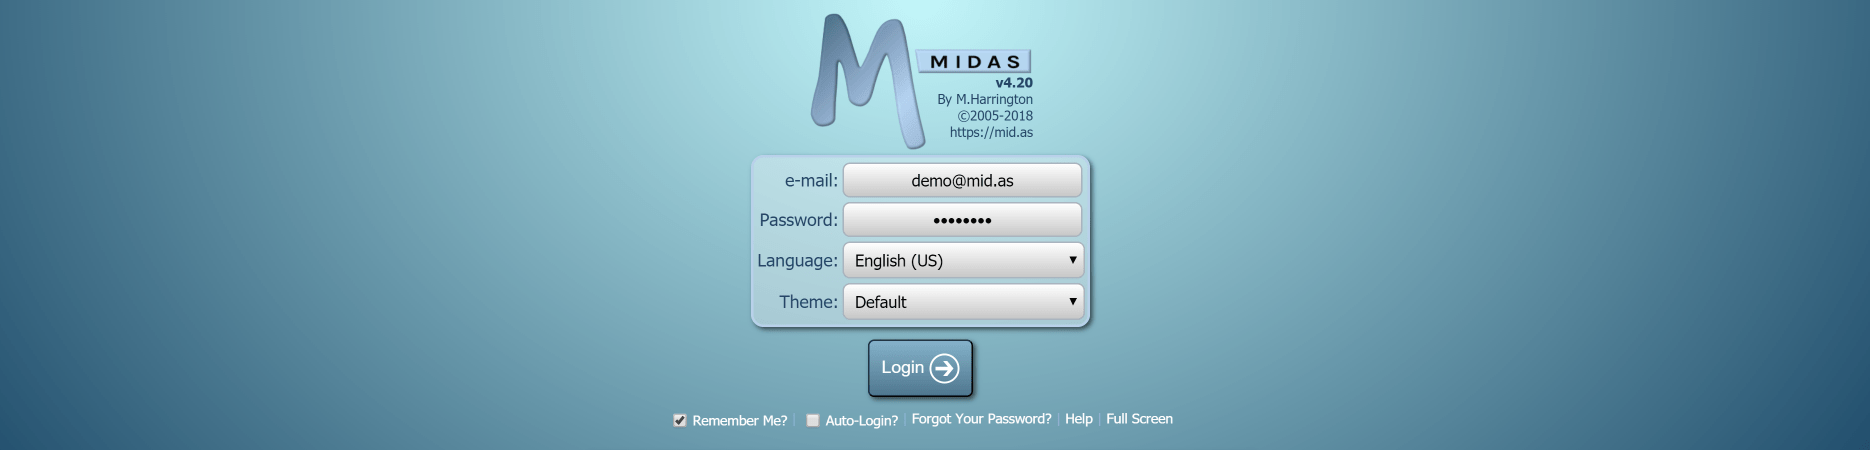 The previous Default theme for MIDAS 